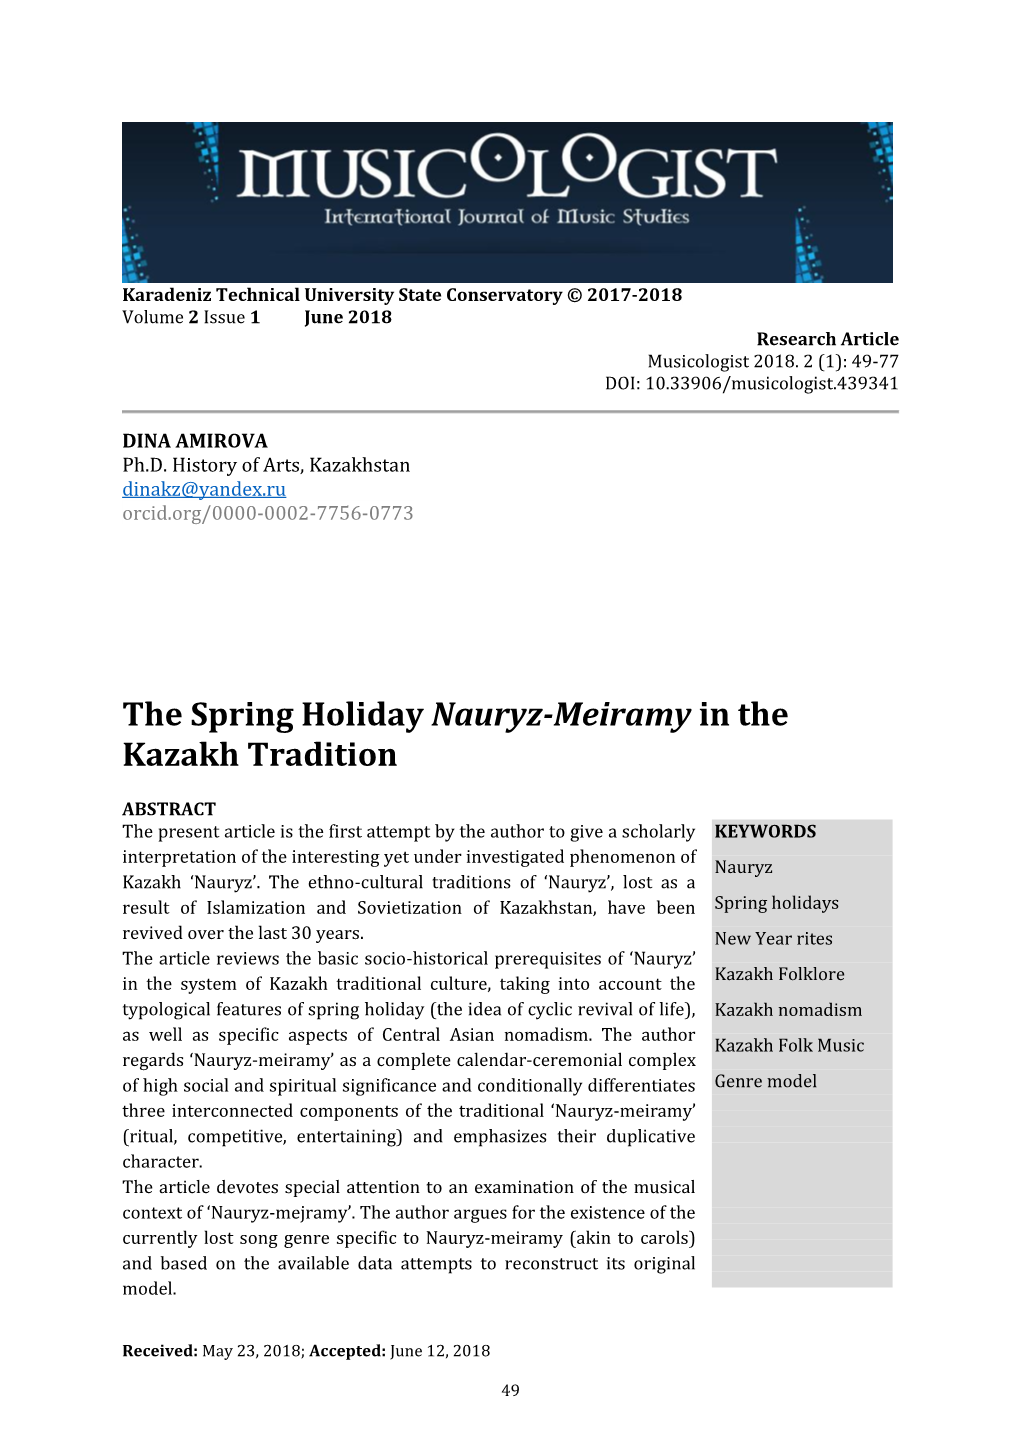 The Spring Holiday Nauryz-Meiramy in the Kazakh Tradition